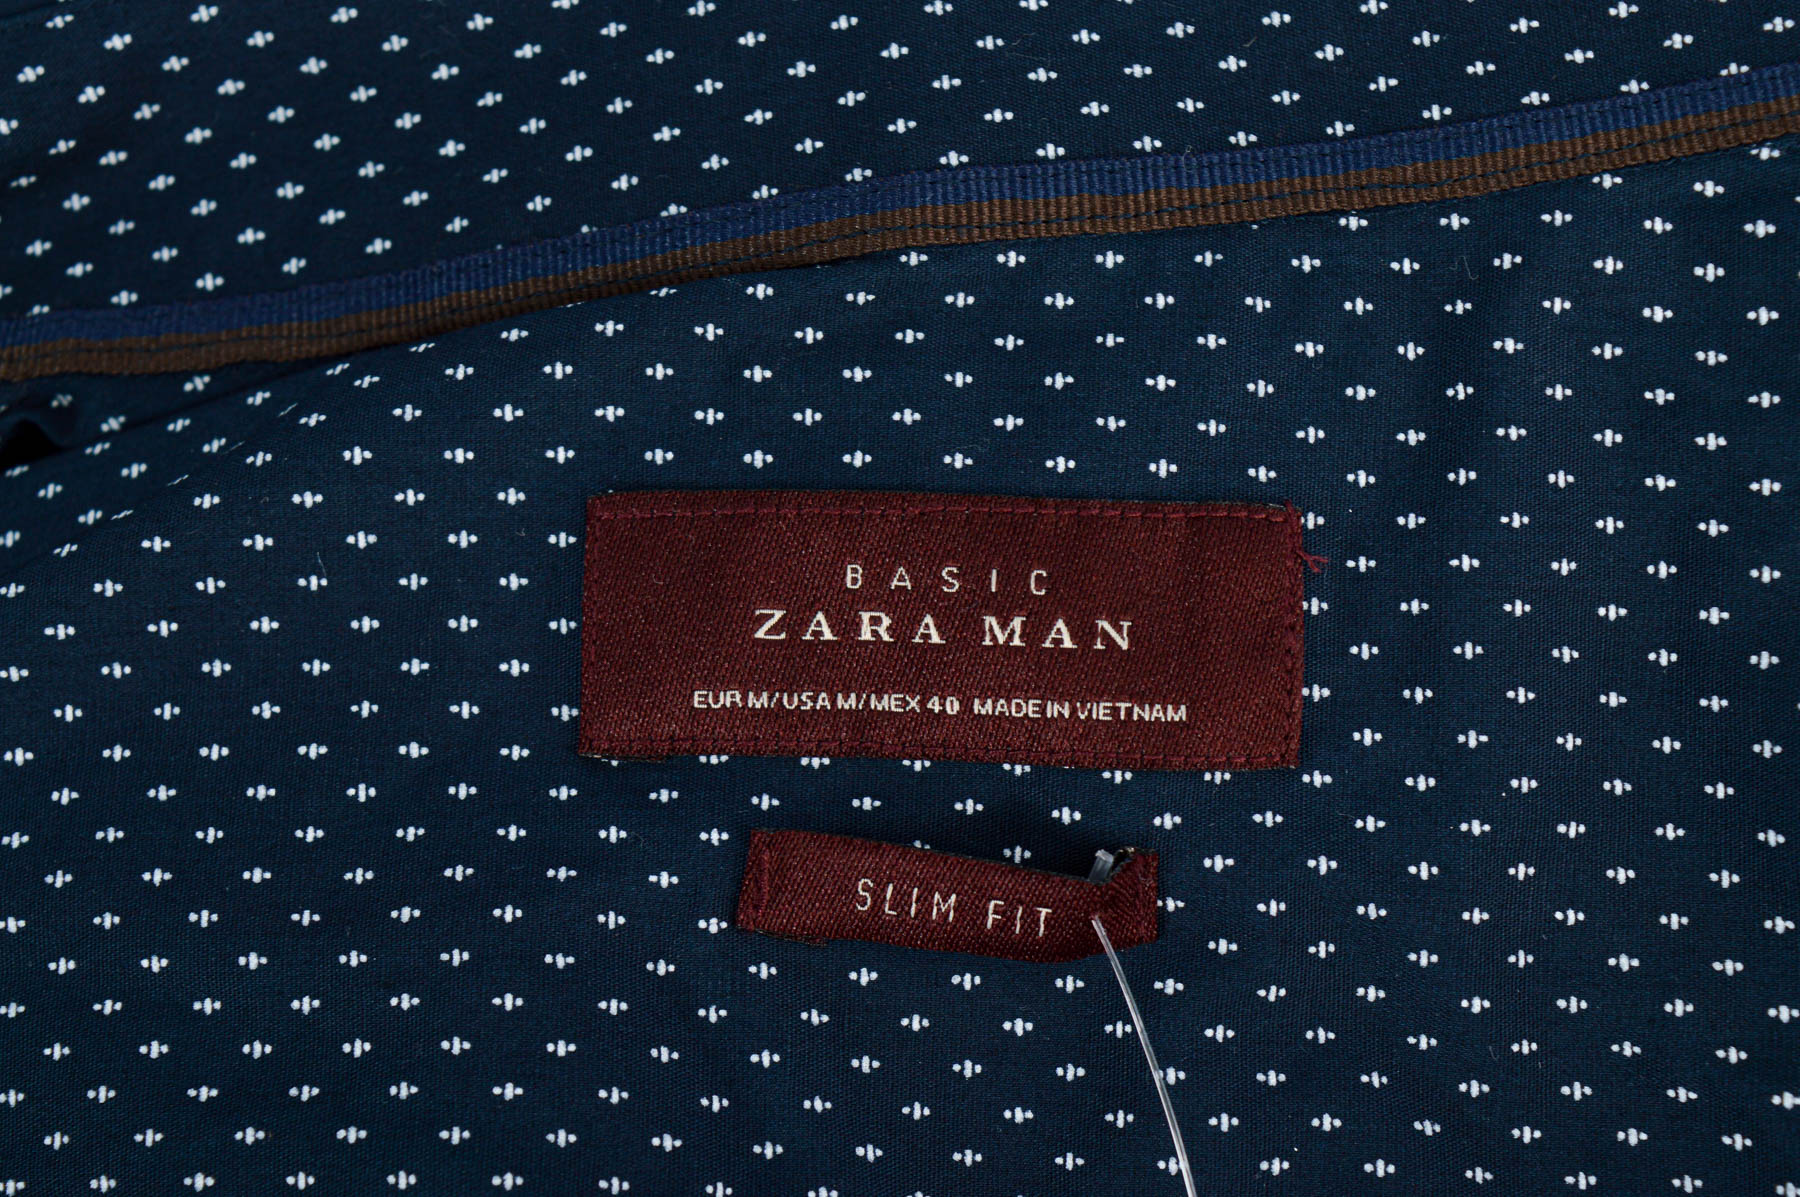 Мъжка риза - ZARA Man - 2